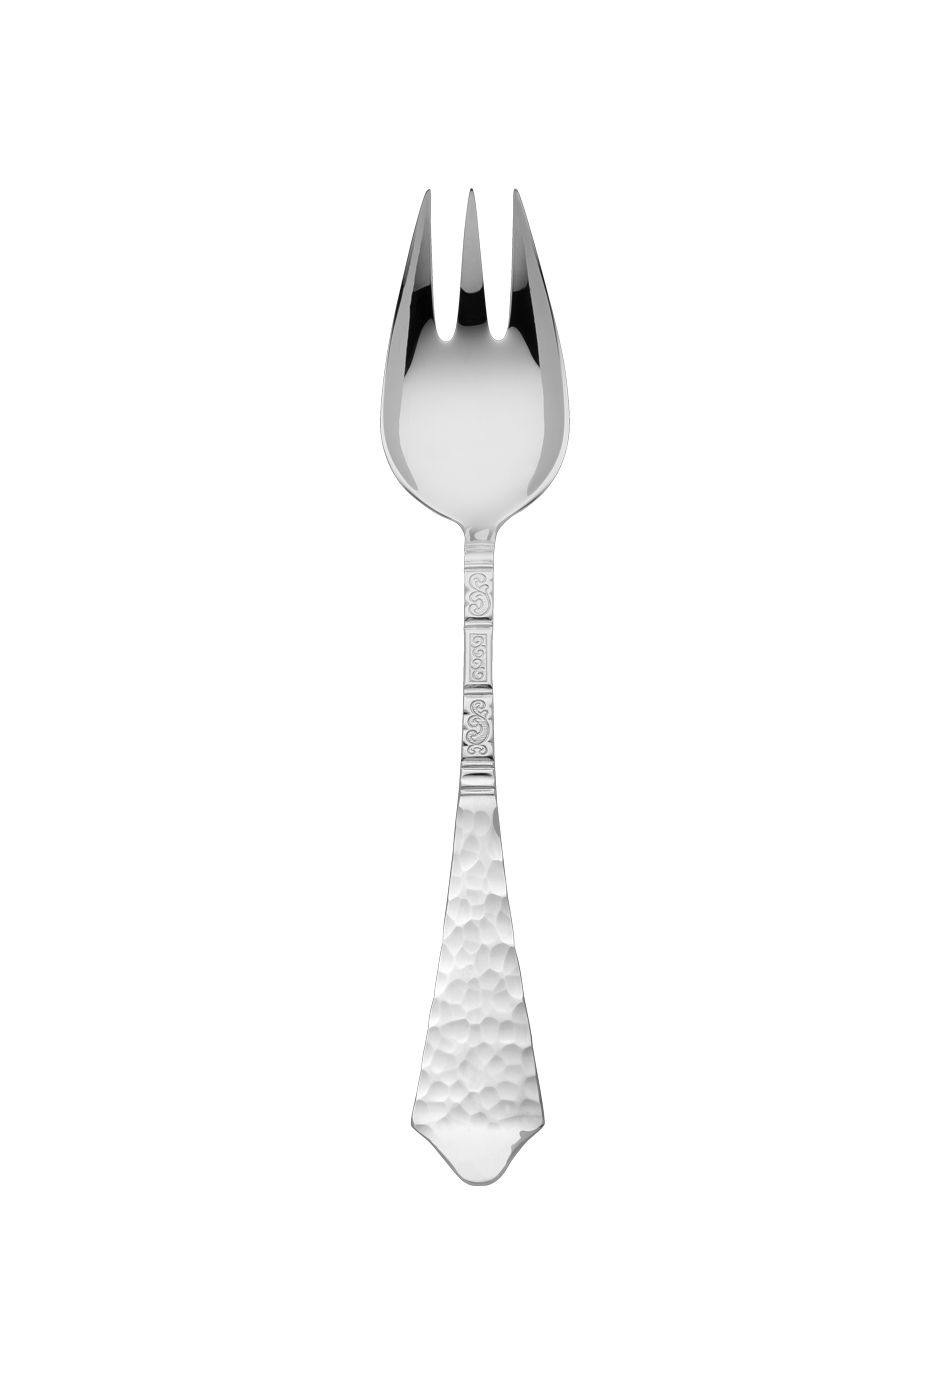 Hermitage Vegetable Fork (150g massive silverplated)